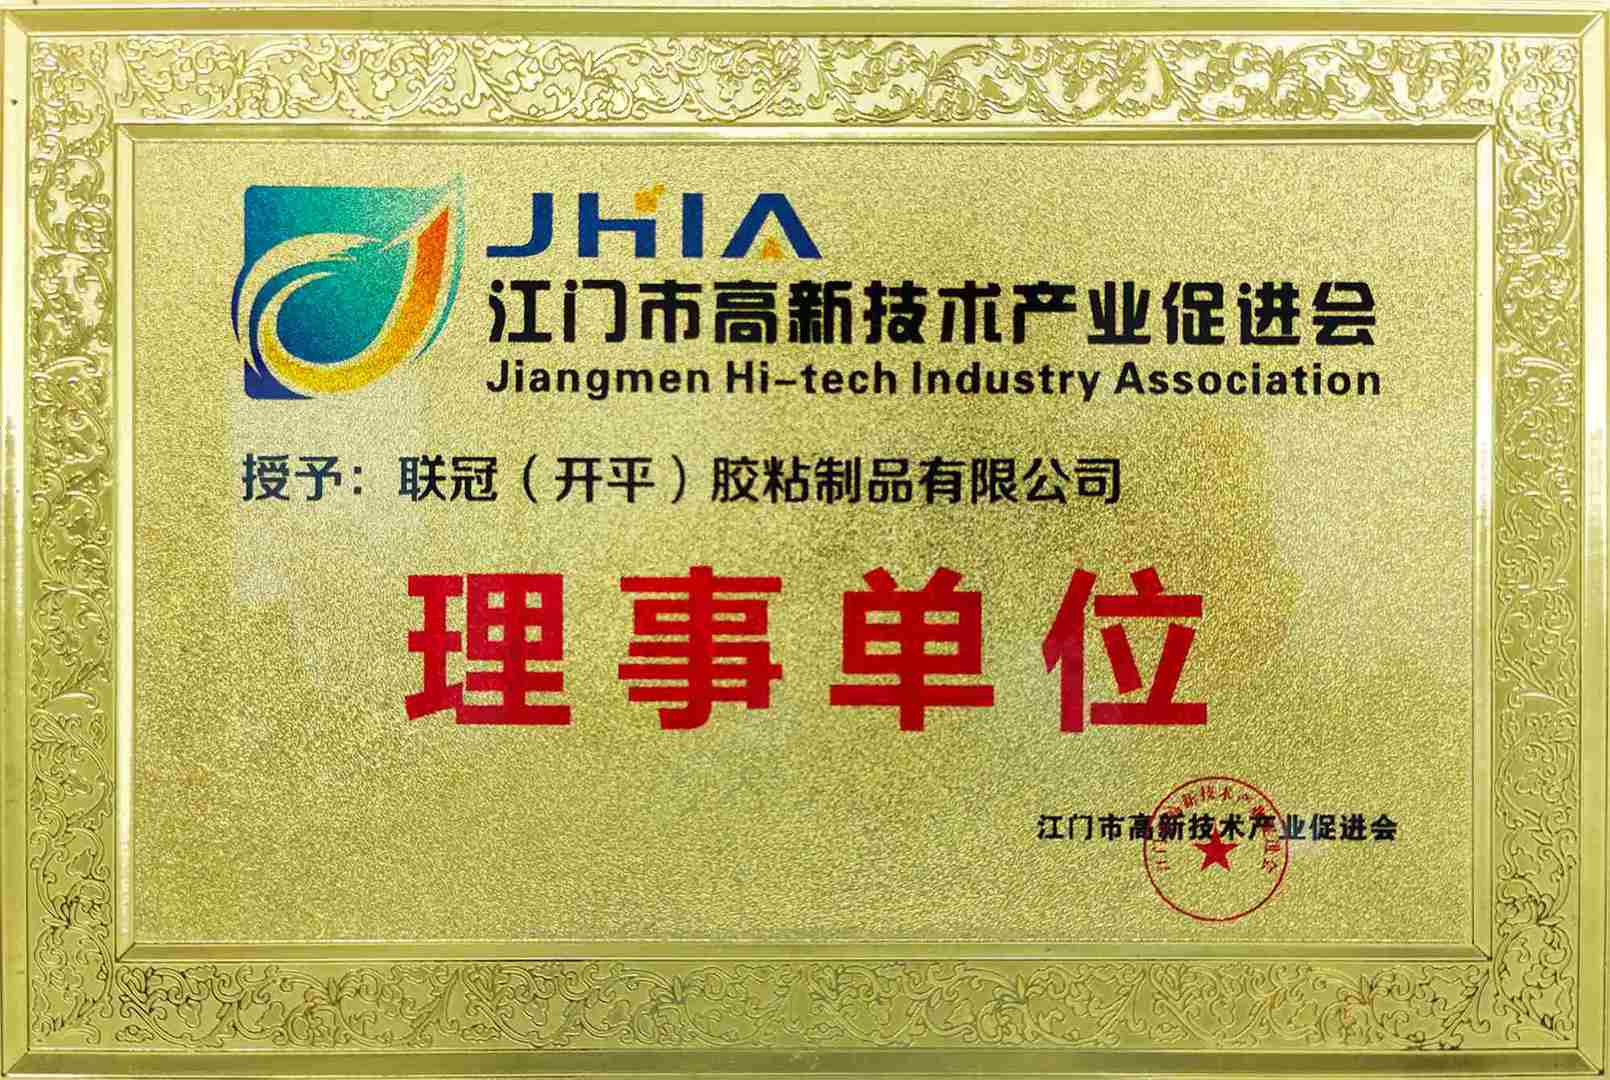 Member unit of Jiangmen High-tech Industry Promotion Association